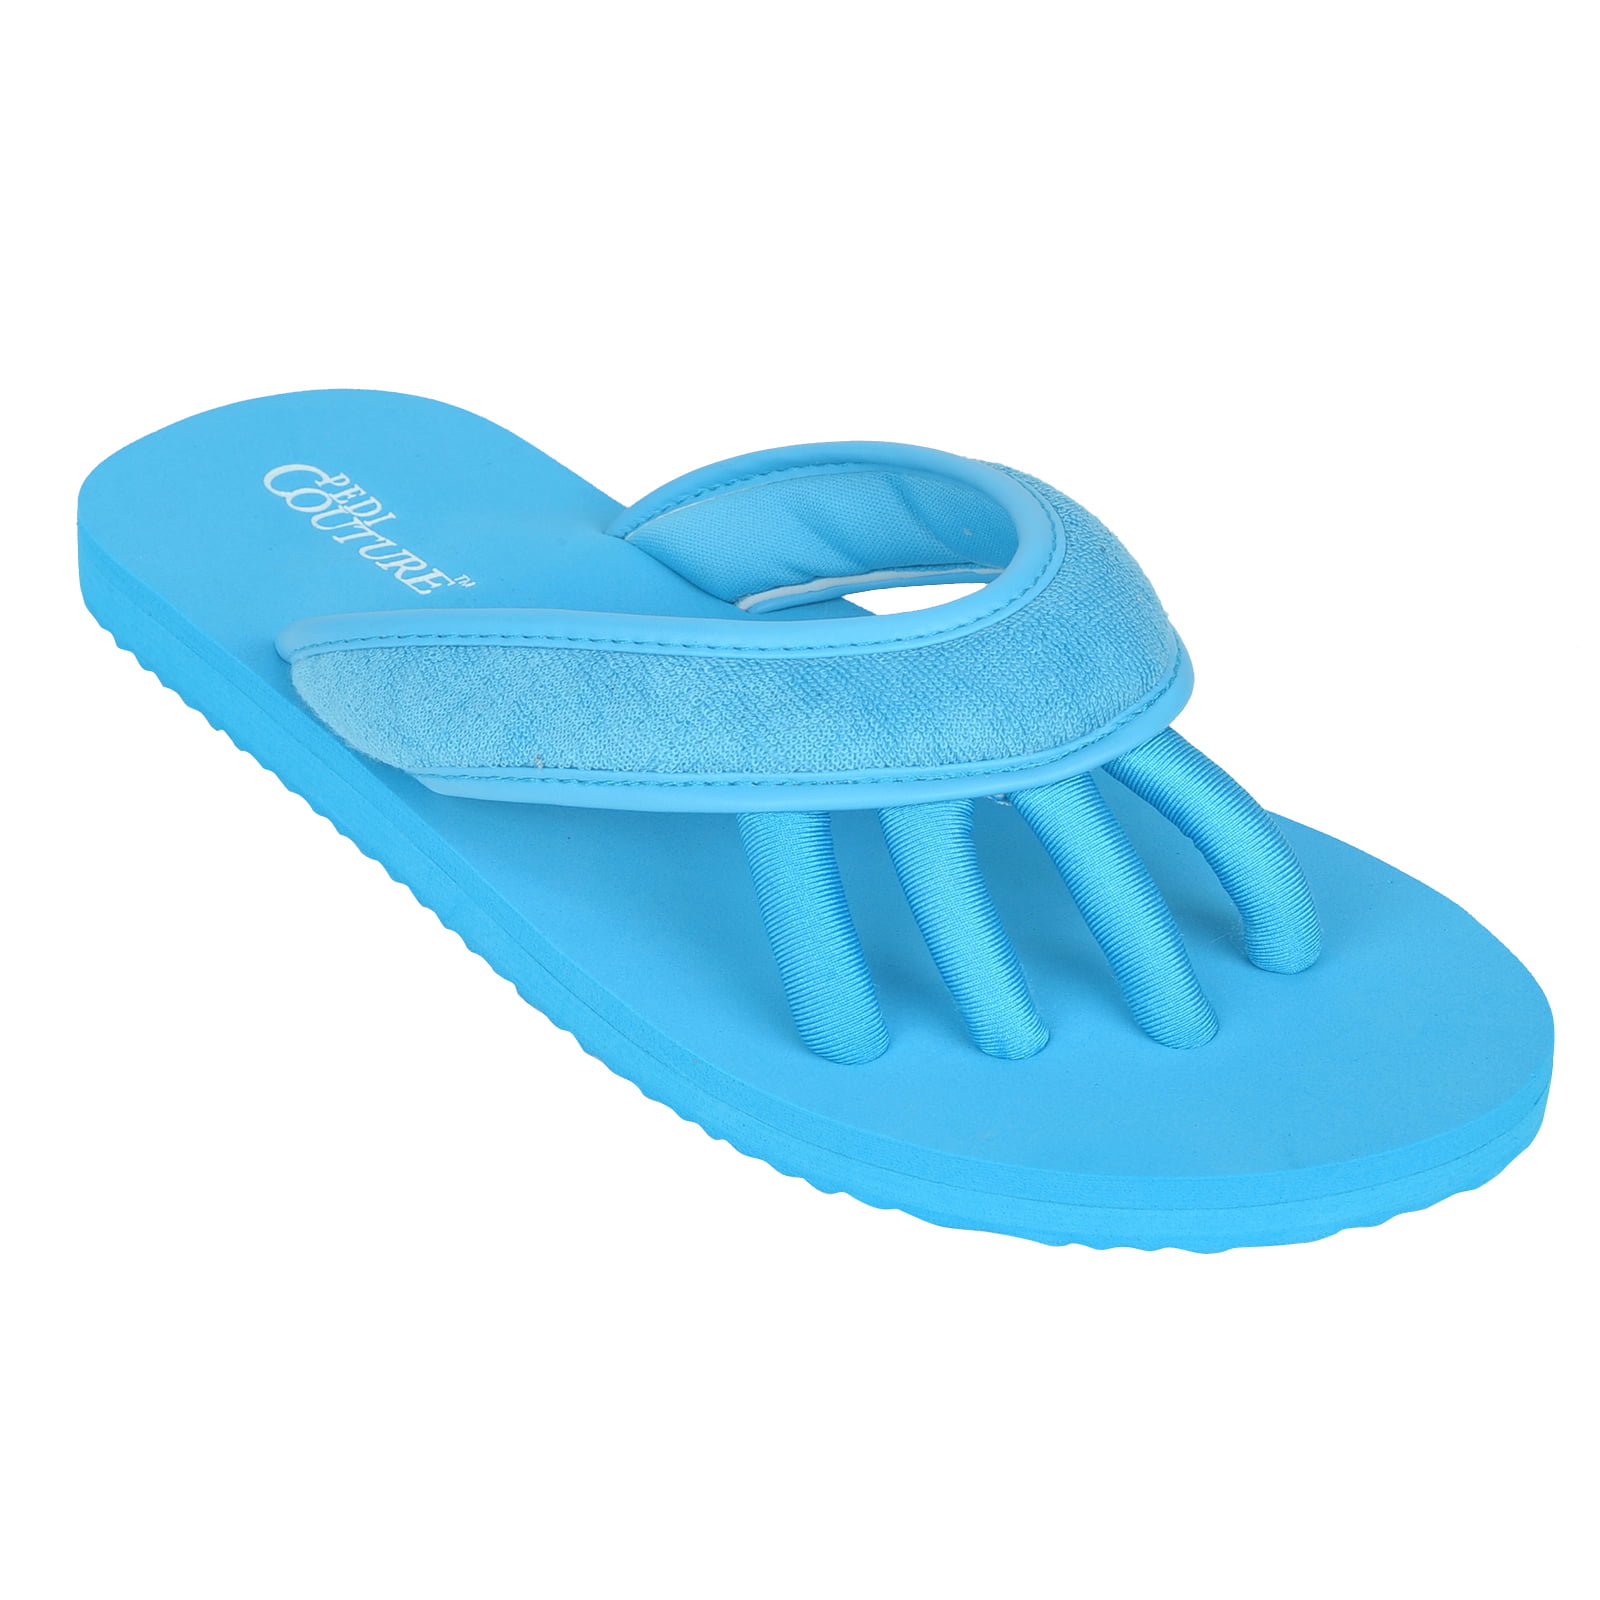 PEDI COUTURE NEW Women's Pedicure Spa Toe Separator Sandal Flip Flops ...